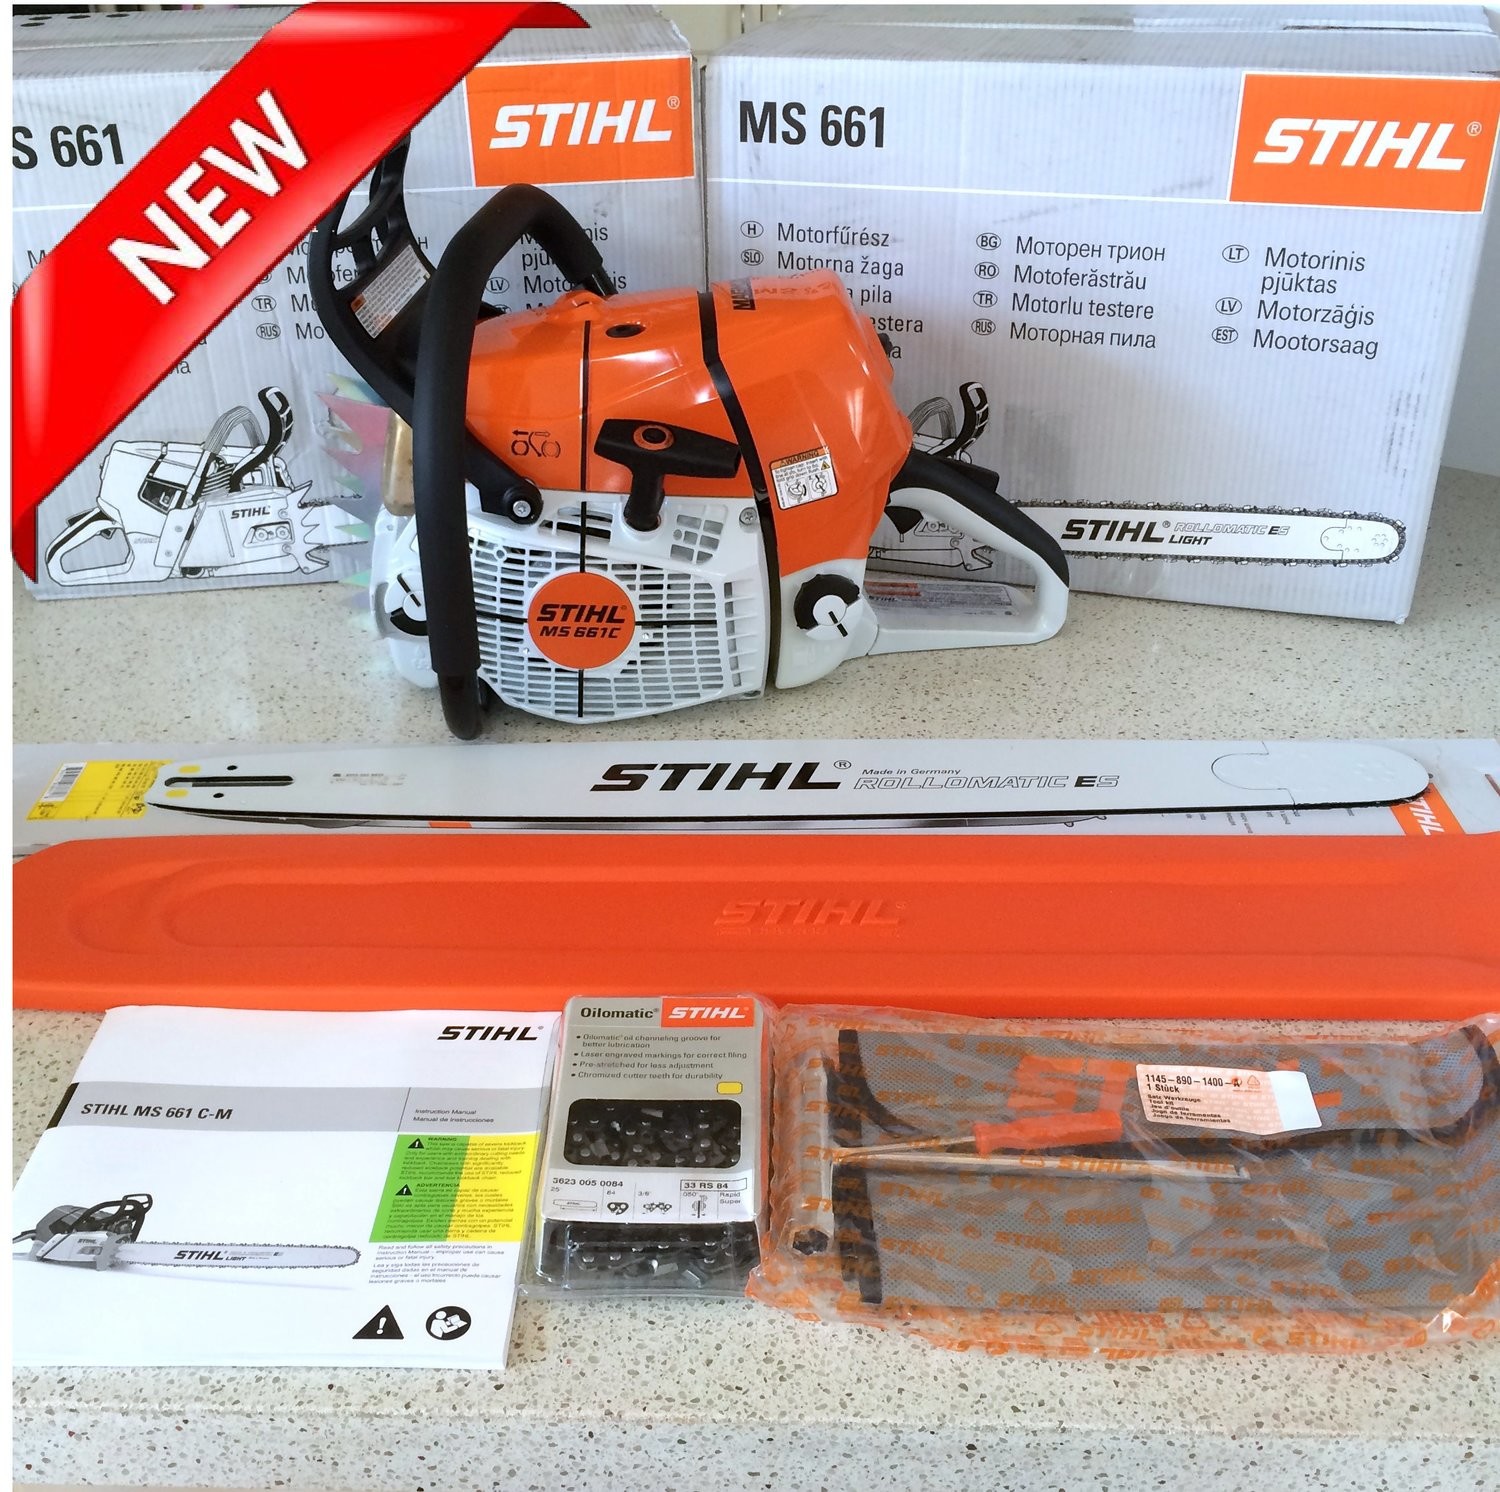 Stihl MS661 C-M Magnum Chain Saw